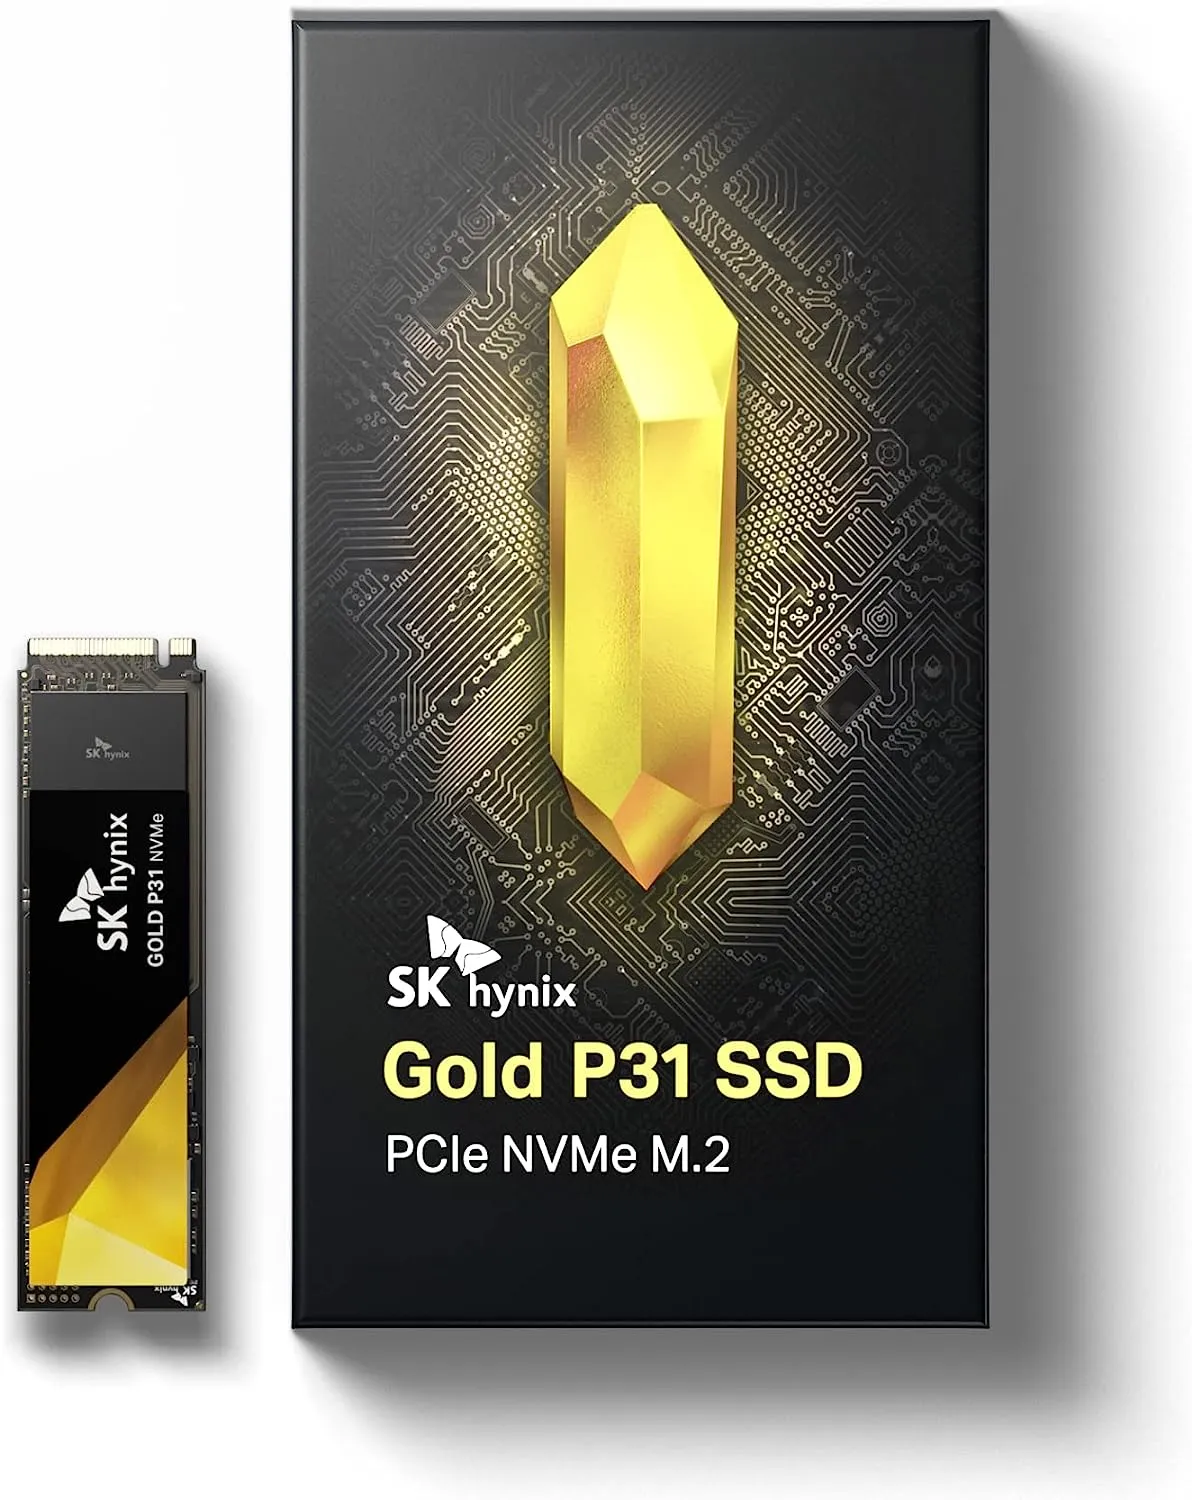 SK hynix Gold P31 Internal SSD